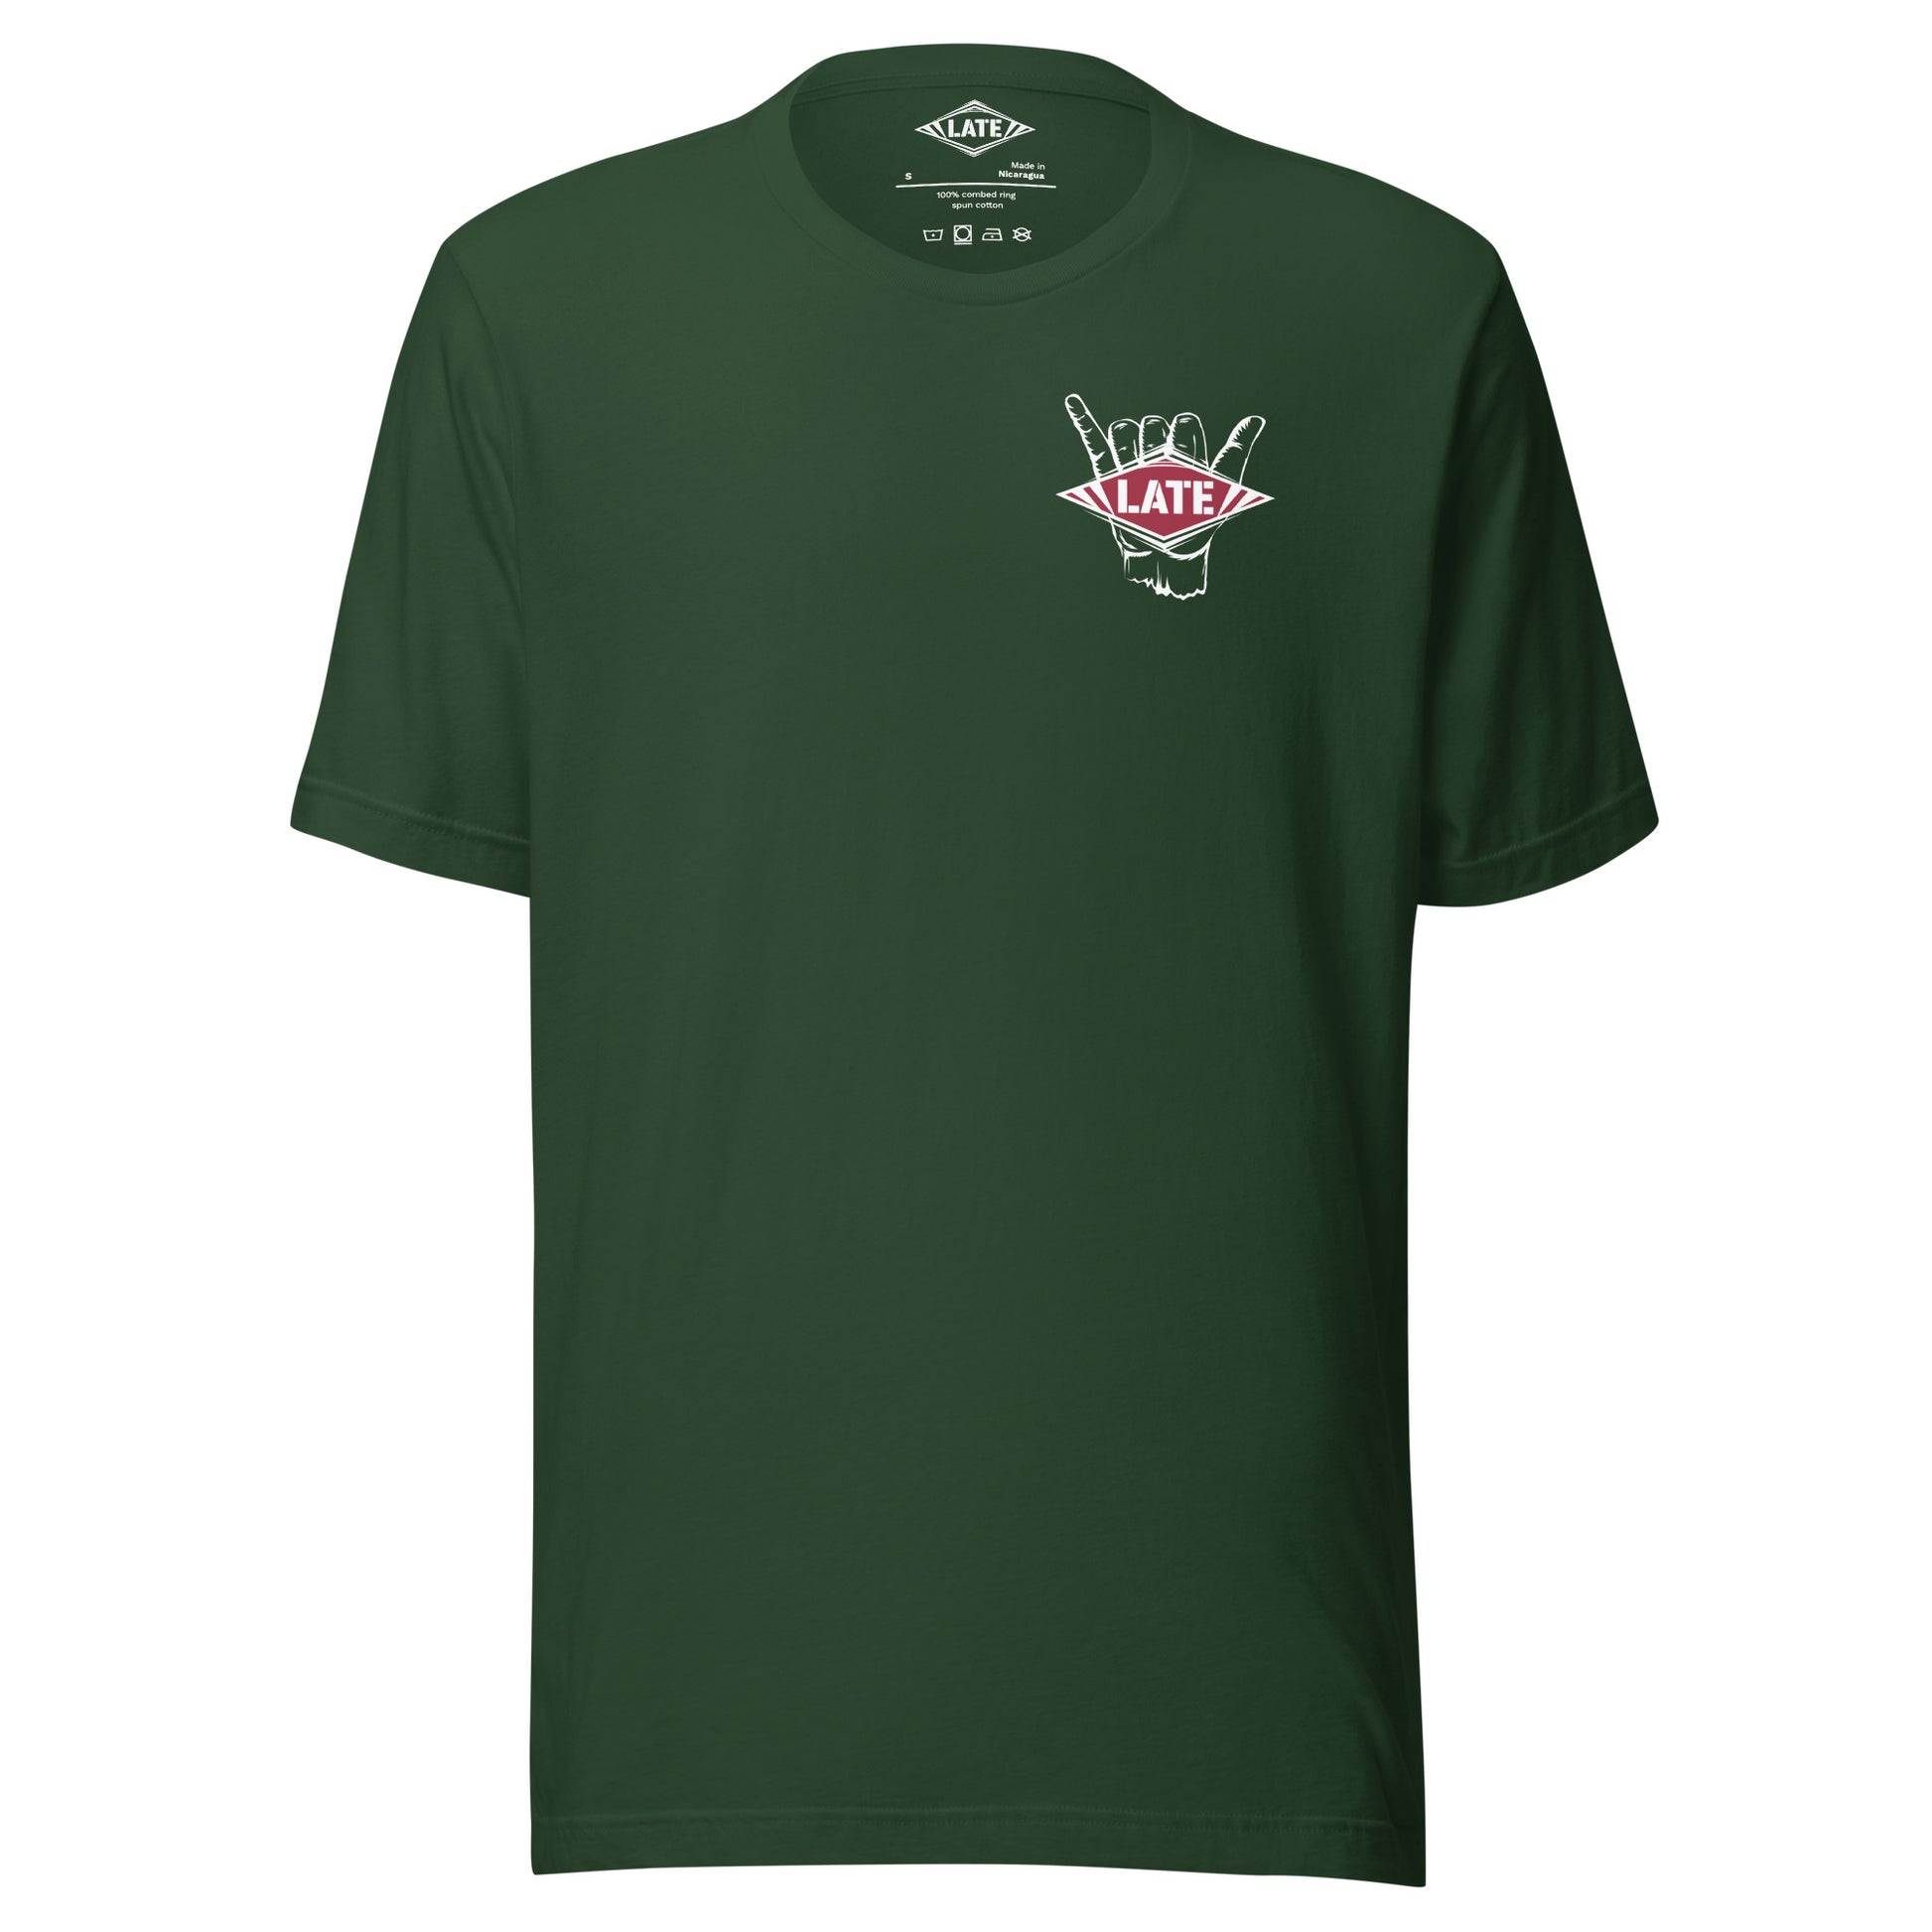 T-Shirt surfing main shaka avec le logo Late face avant t-shirt unisex couleur vert foret